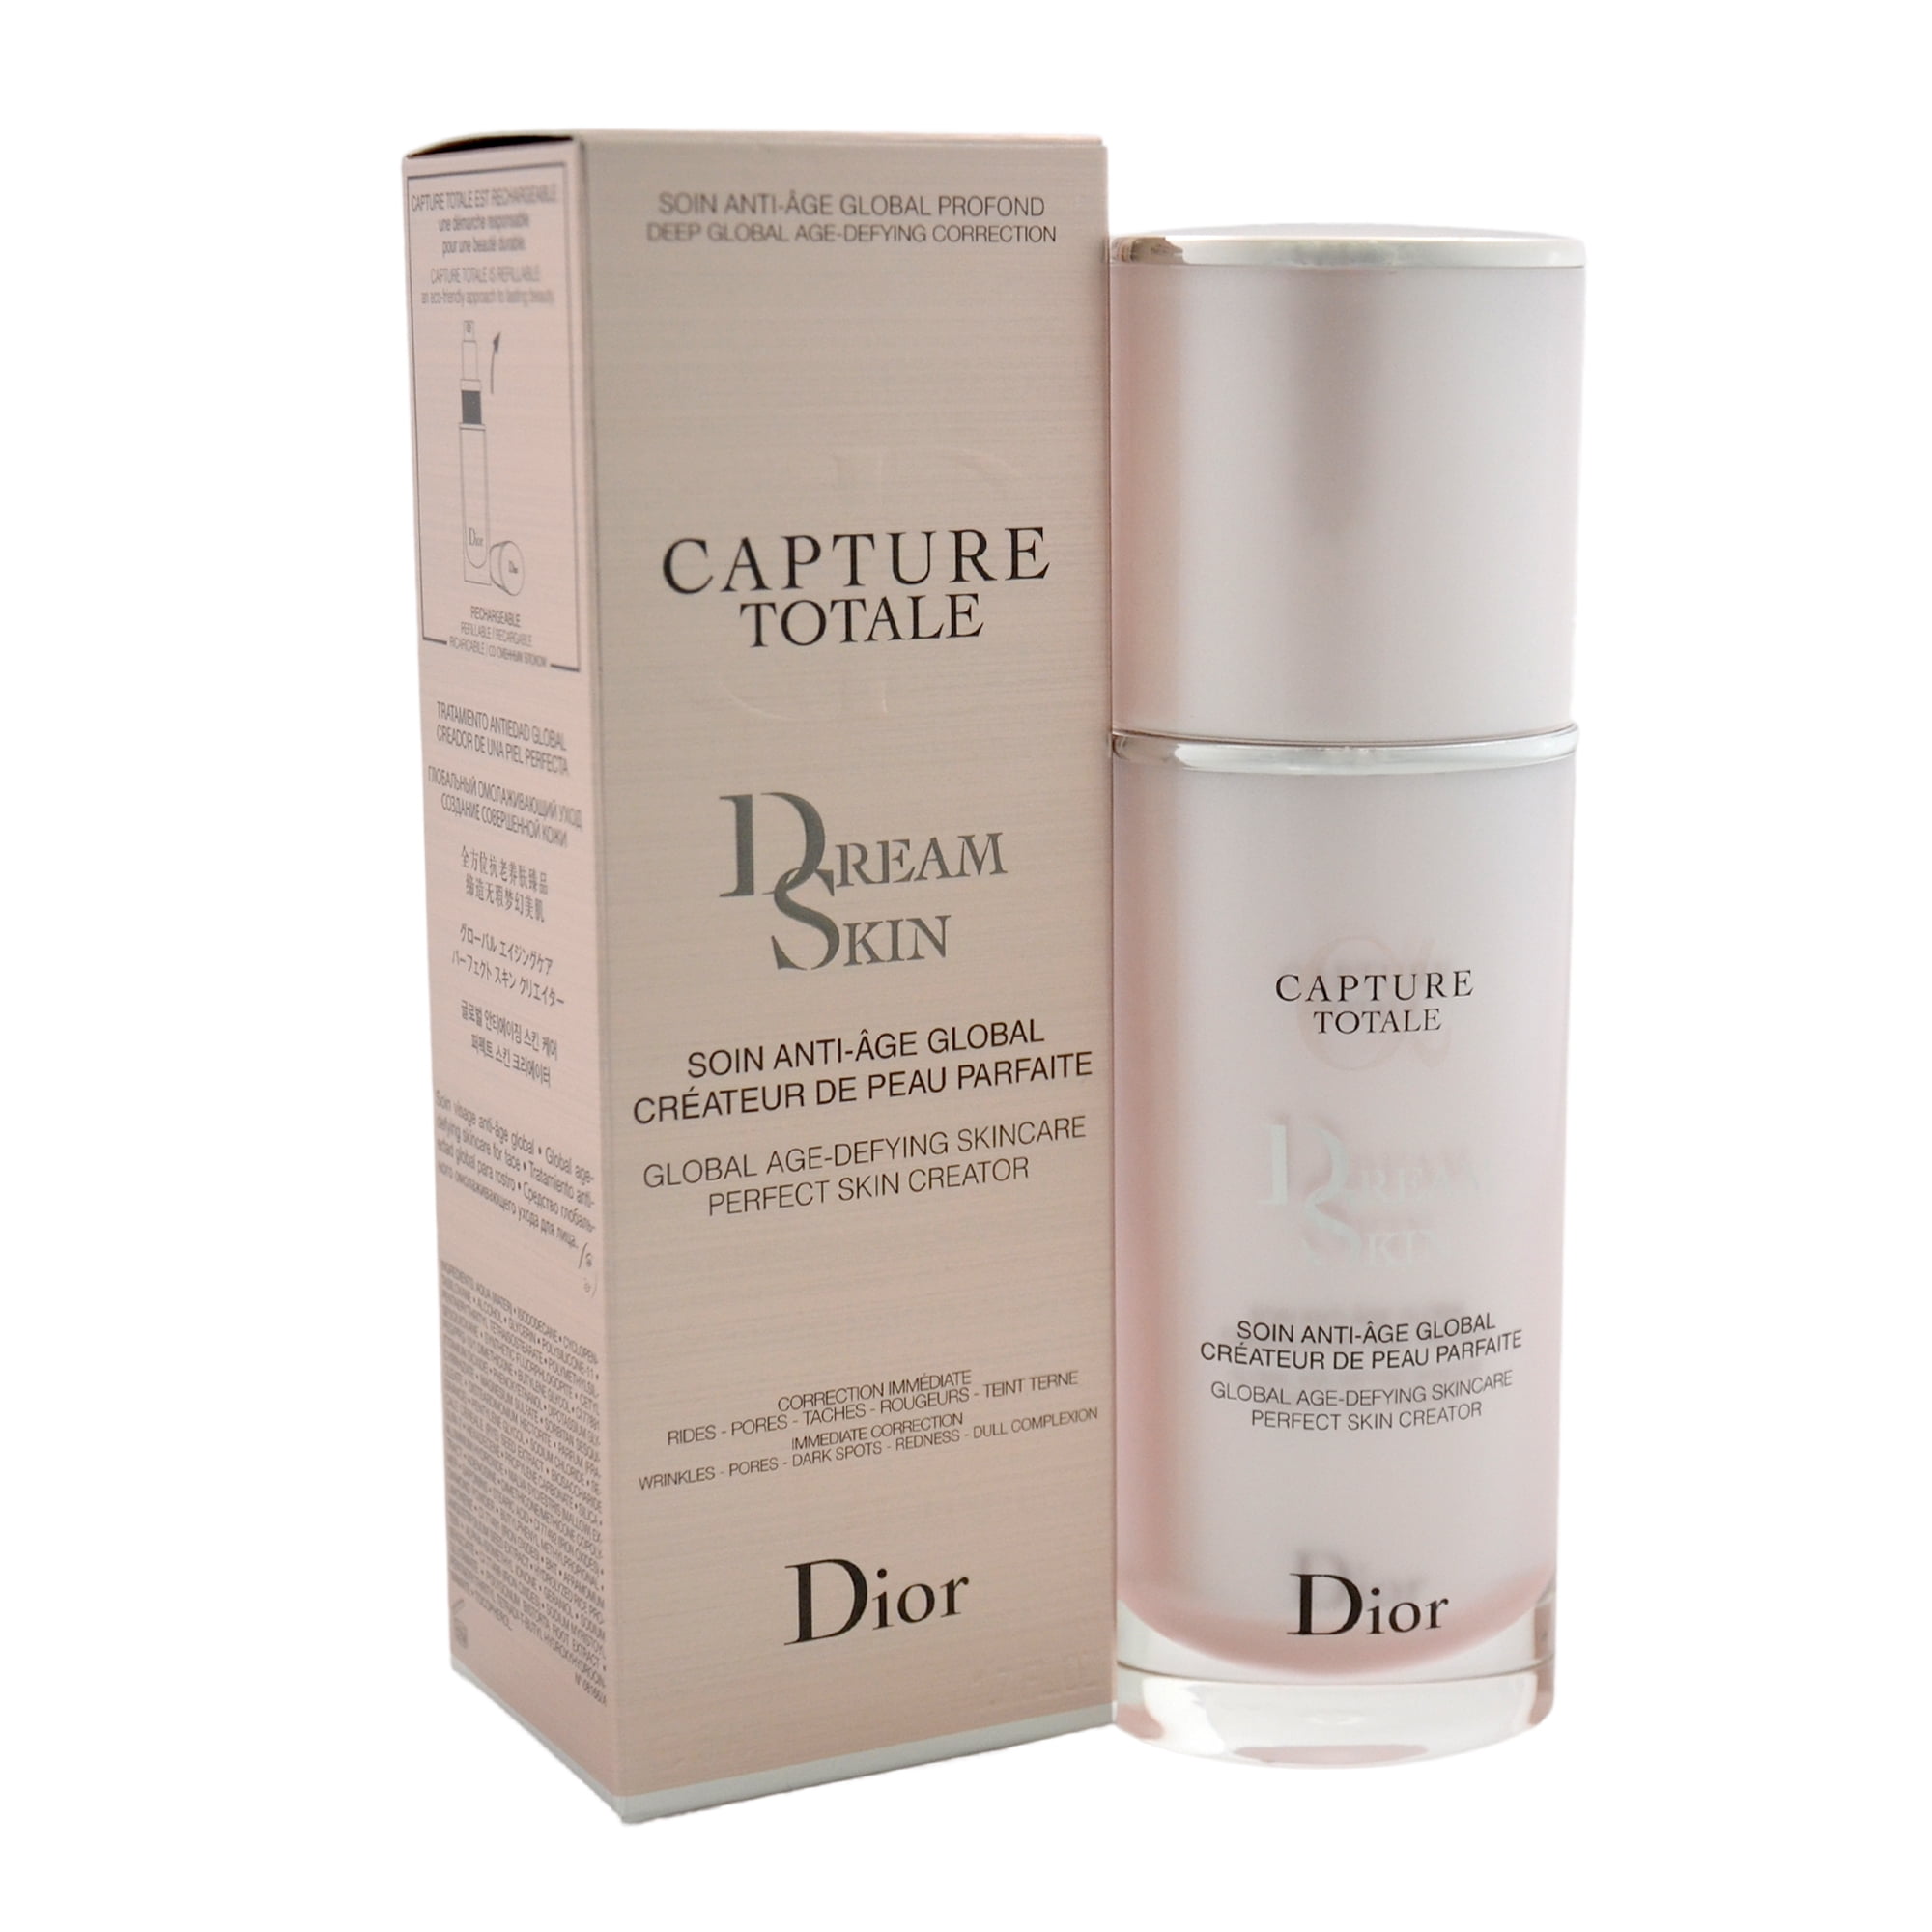 Christian Dior  Capture Totale Dreamskin Care  Perfect Global AgeDefying  Skincare Perfect Skin Creator  Refill